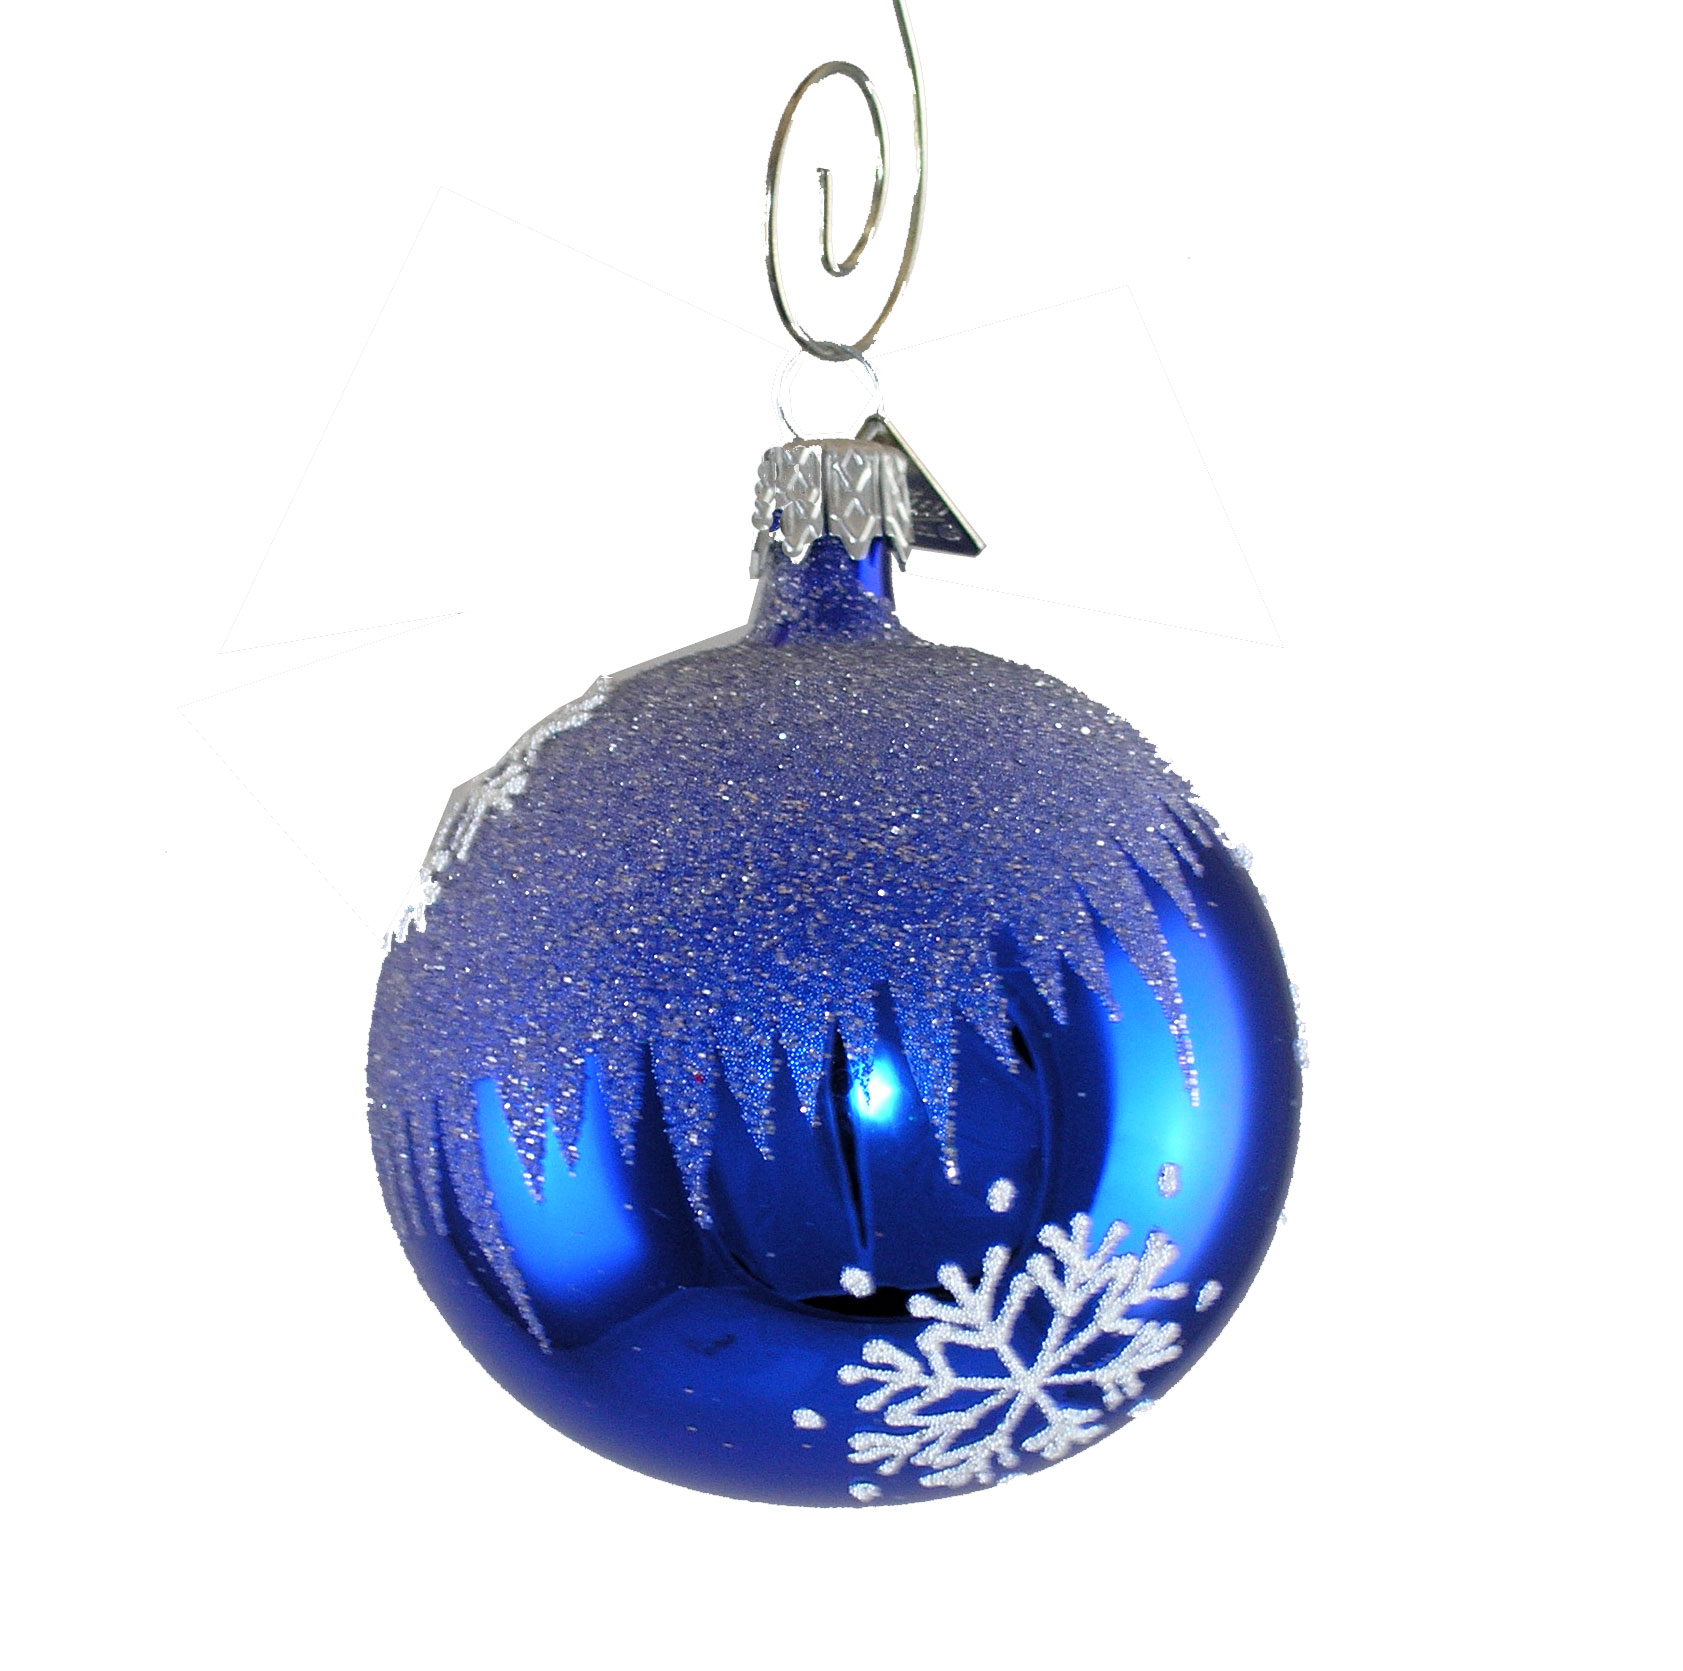 Snowflake Ornaments, handblown glass, gift